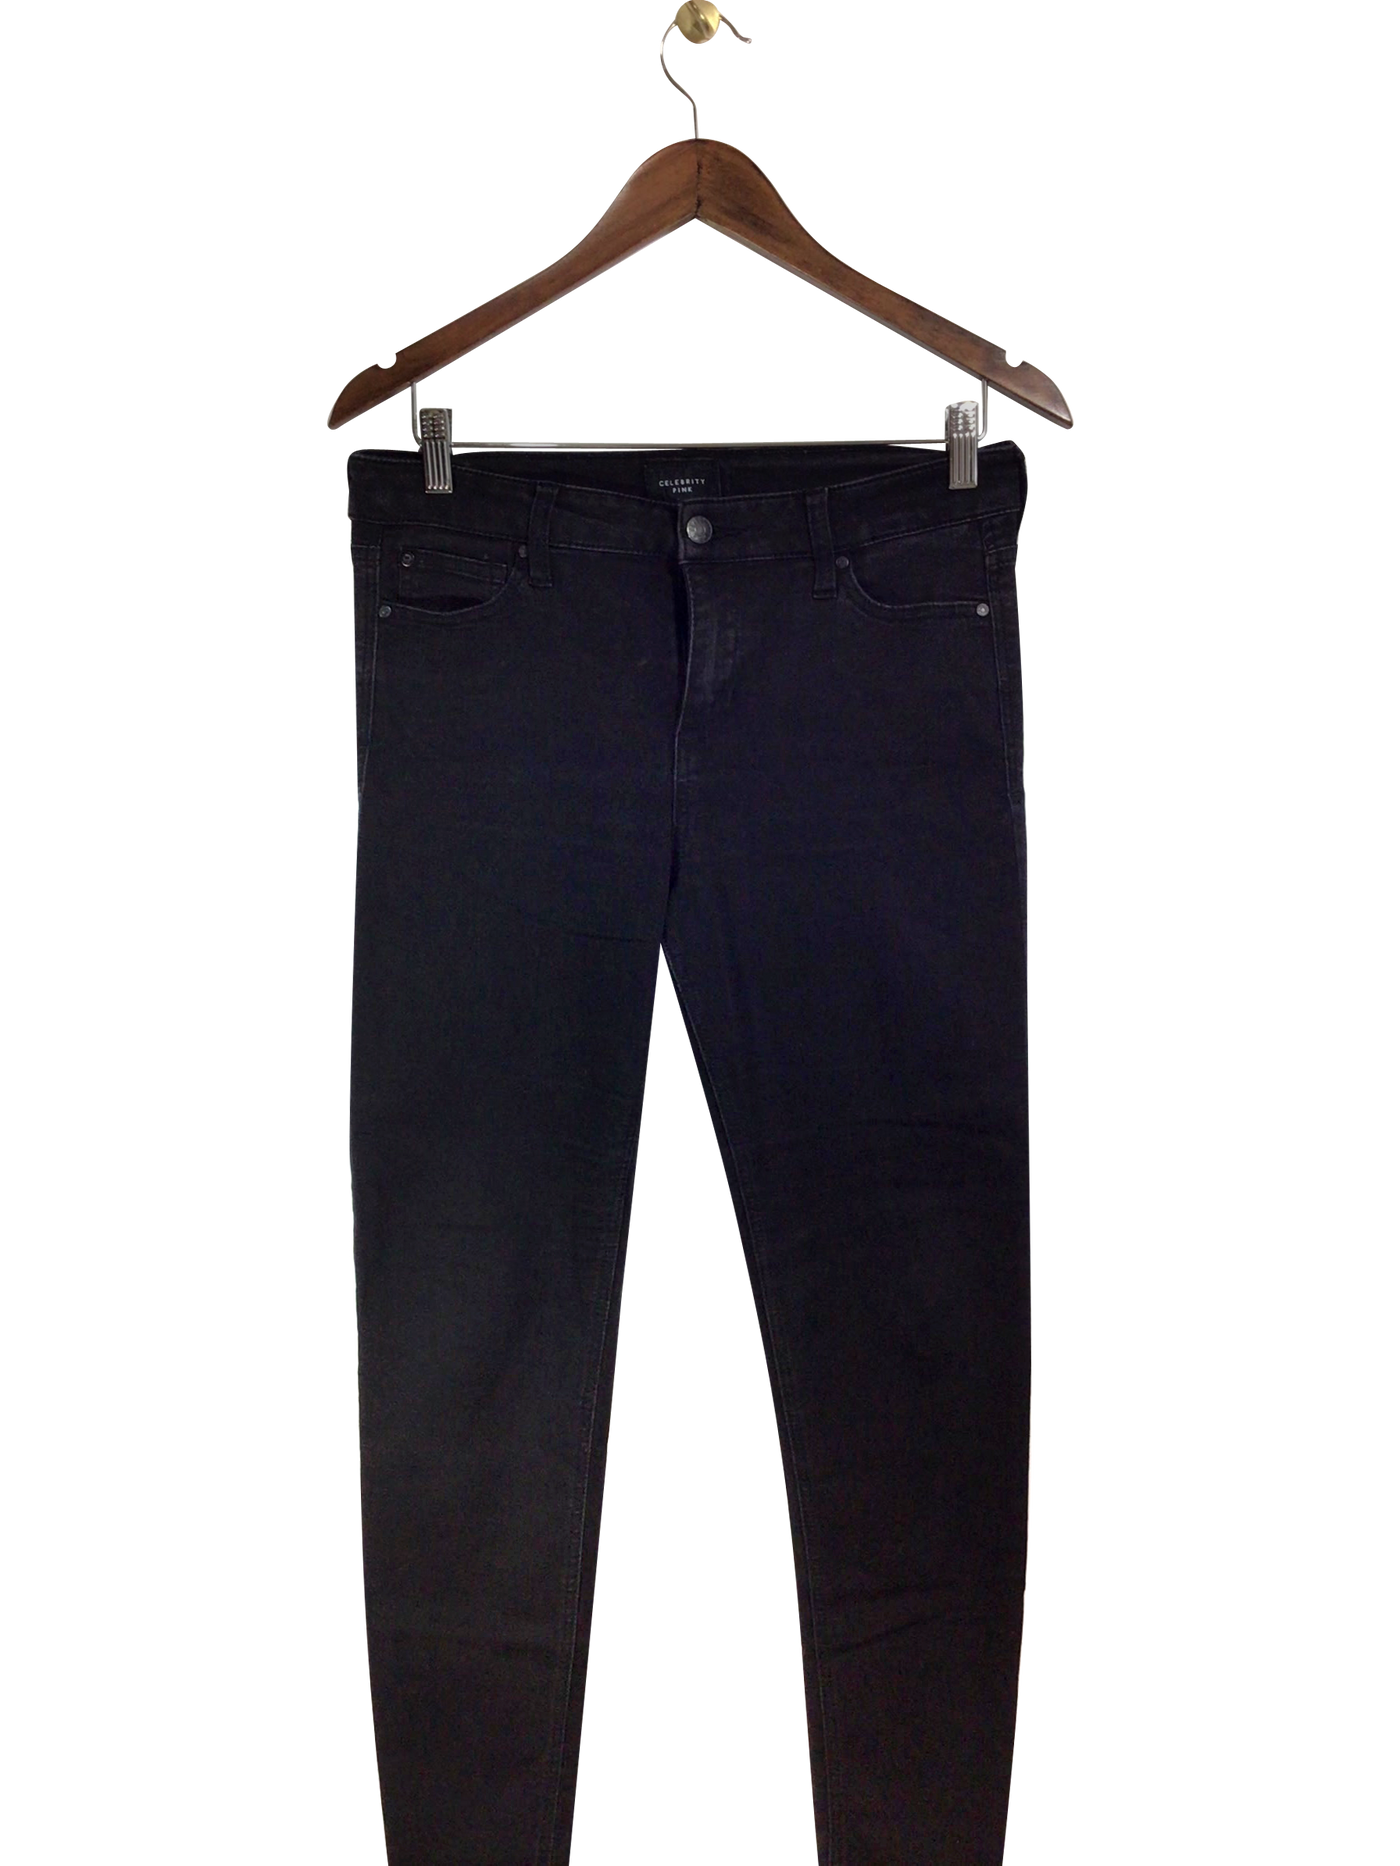 CELEBRITY PINK Regular fit Straight-legged Jeans in Black - Size 29 | 11.04 $ KOOP